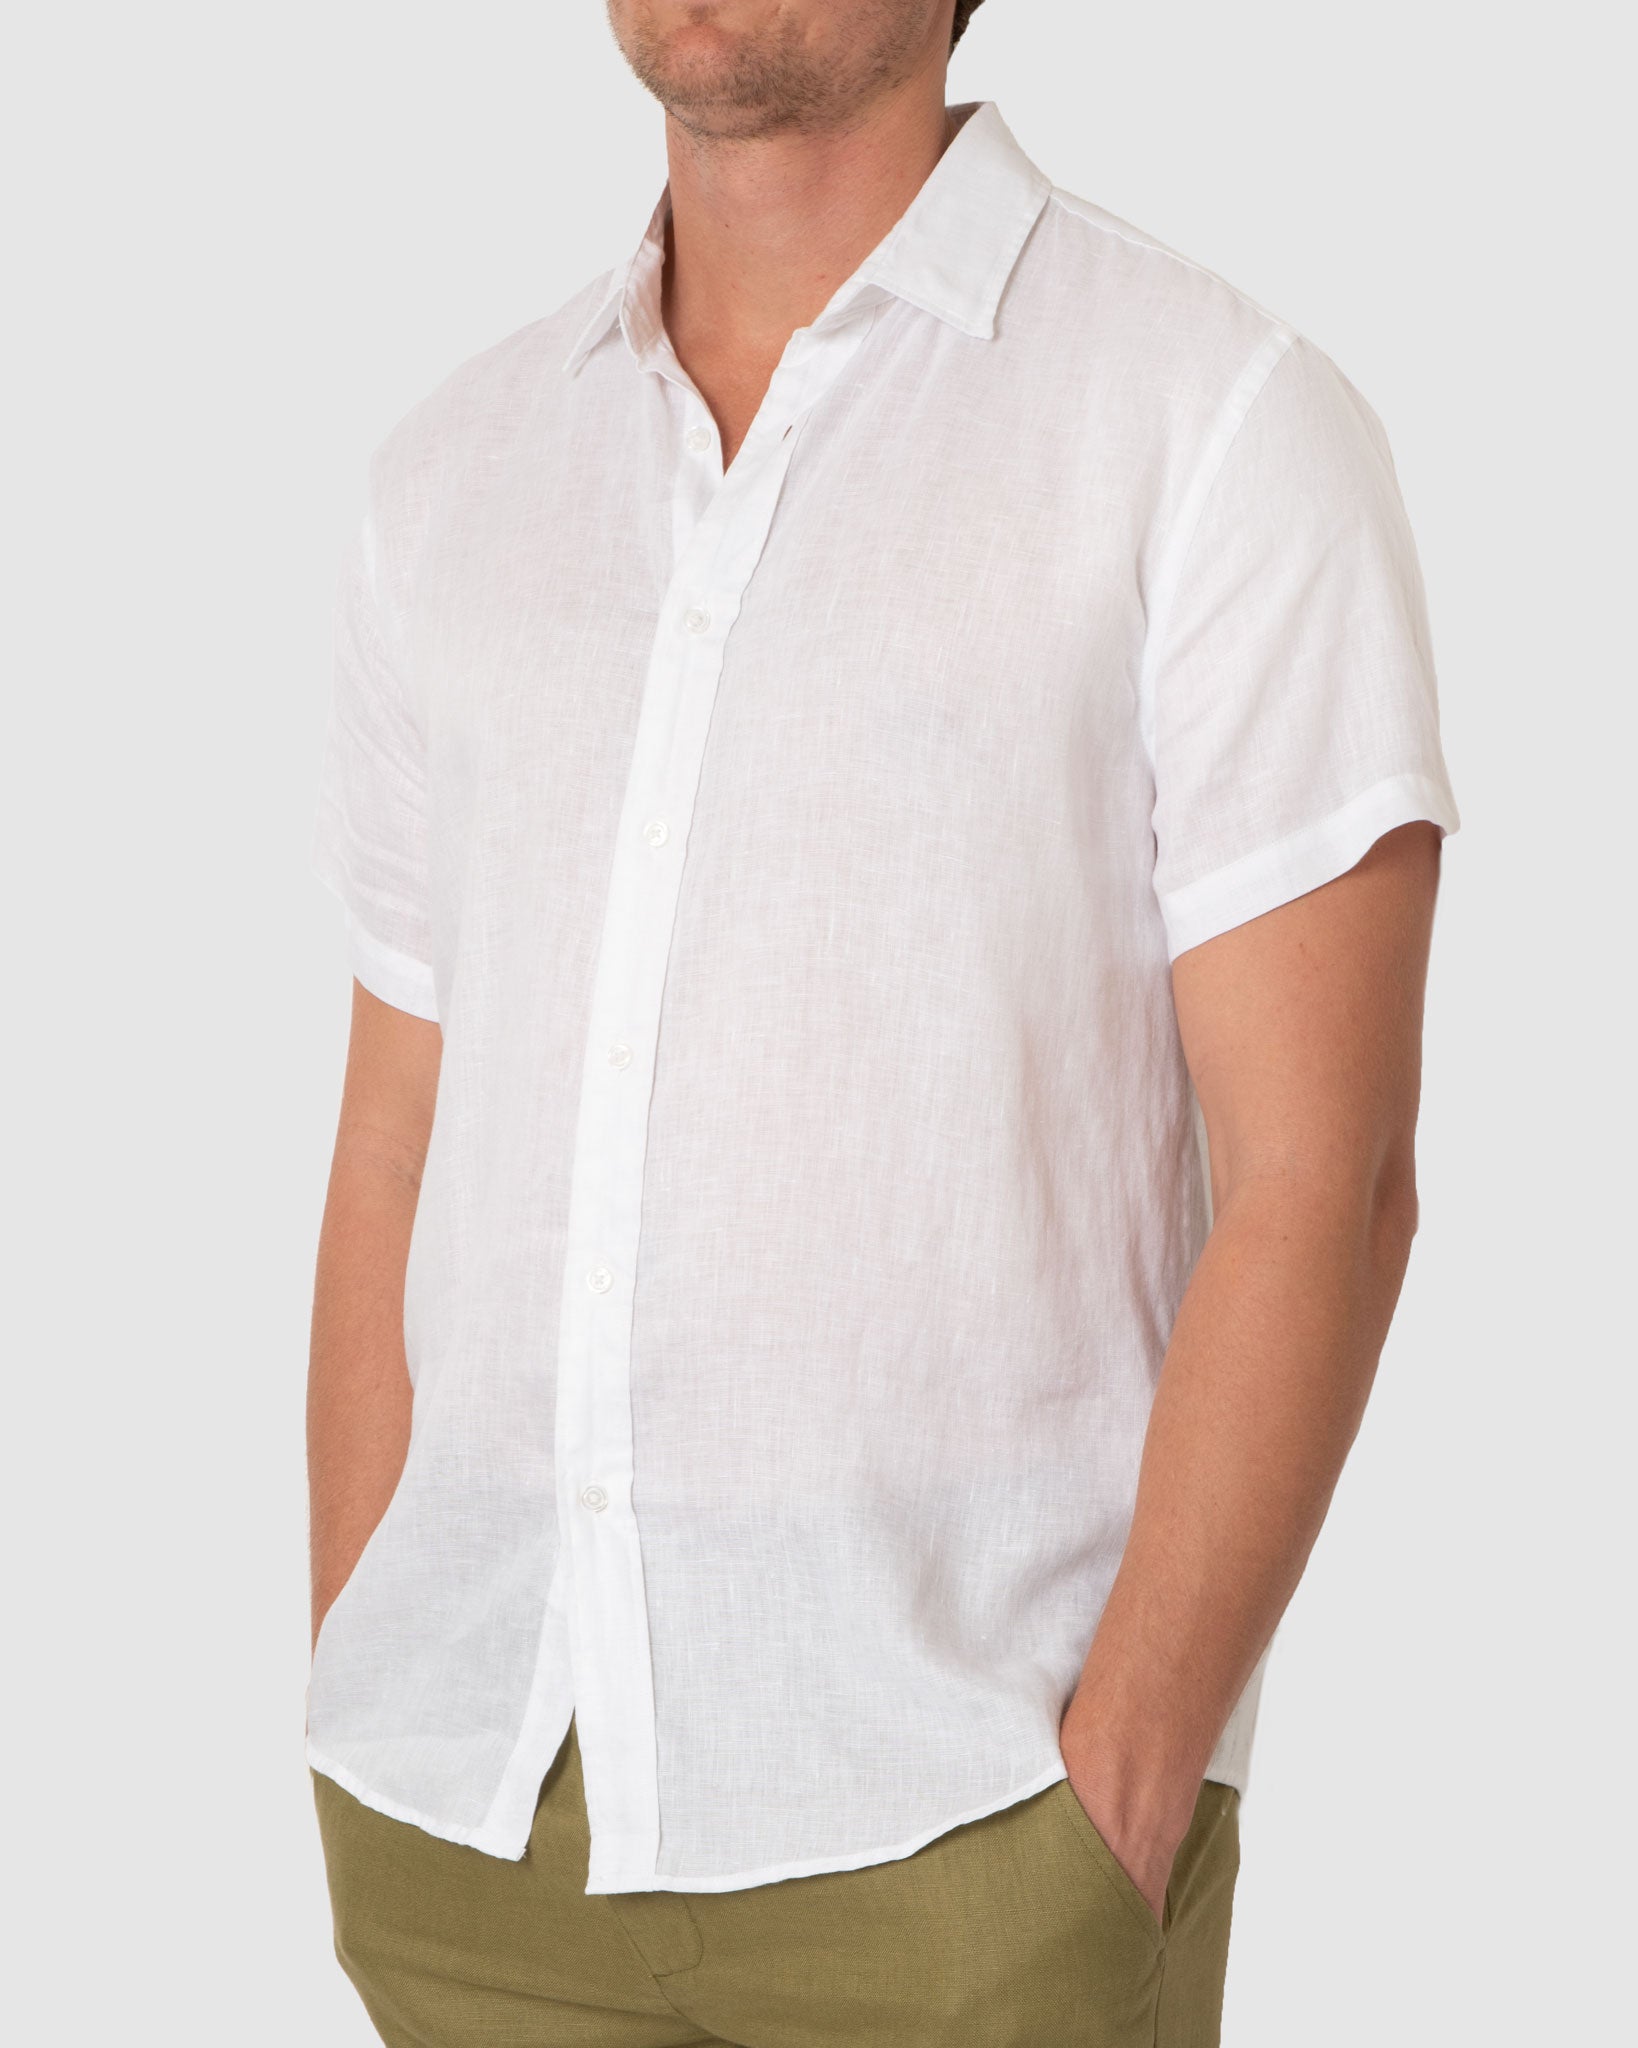 DESTii White Short Sleeve Linen Shirt-DESTii-stride